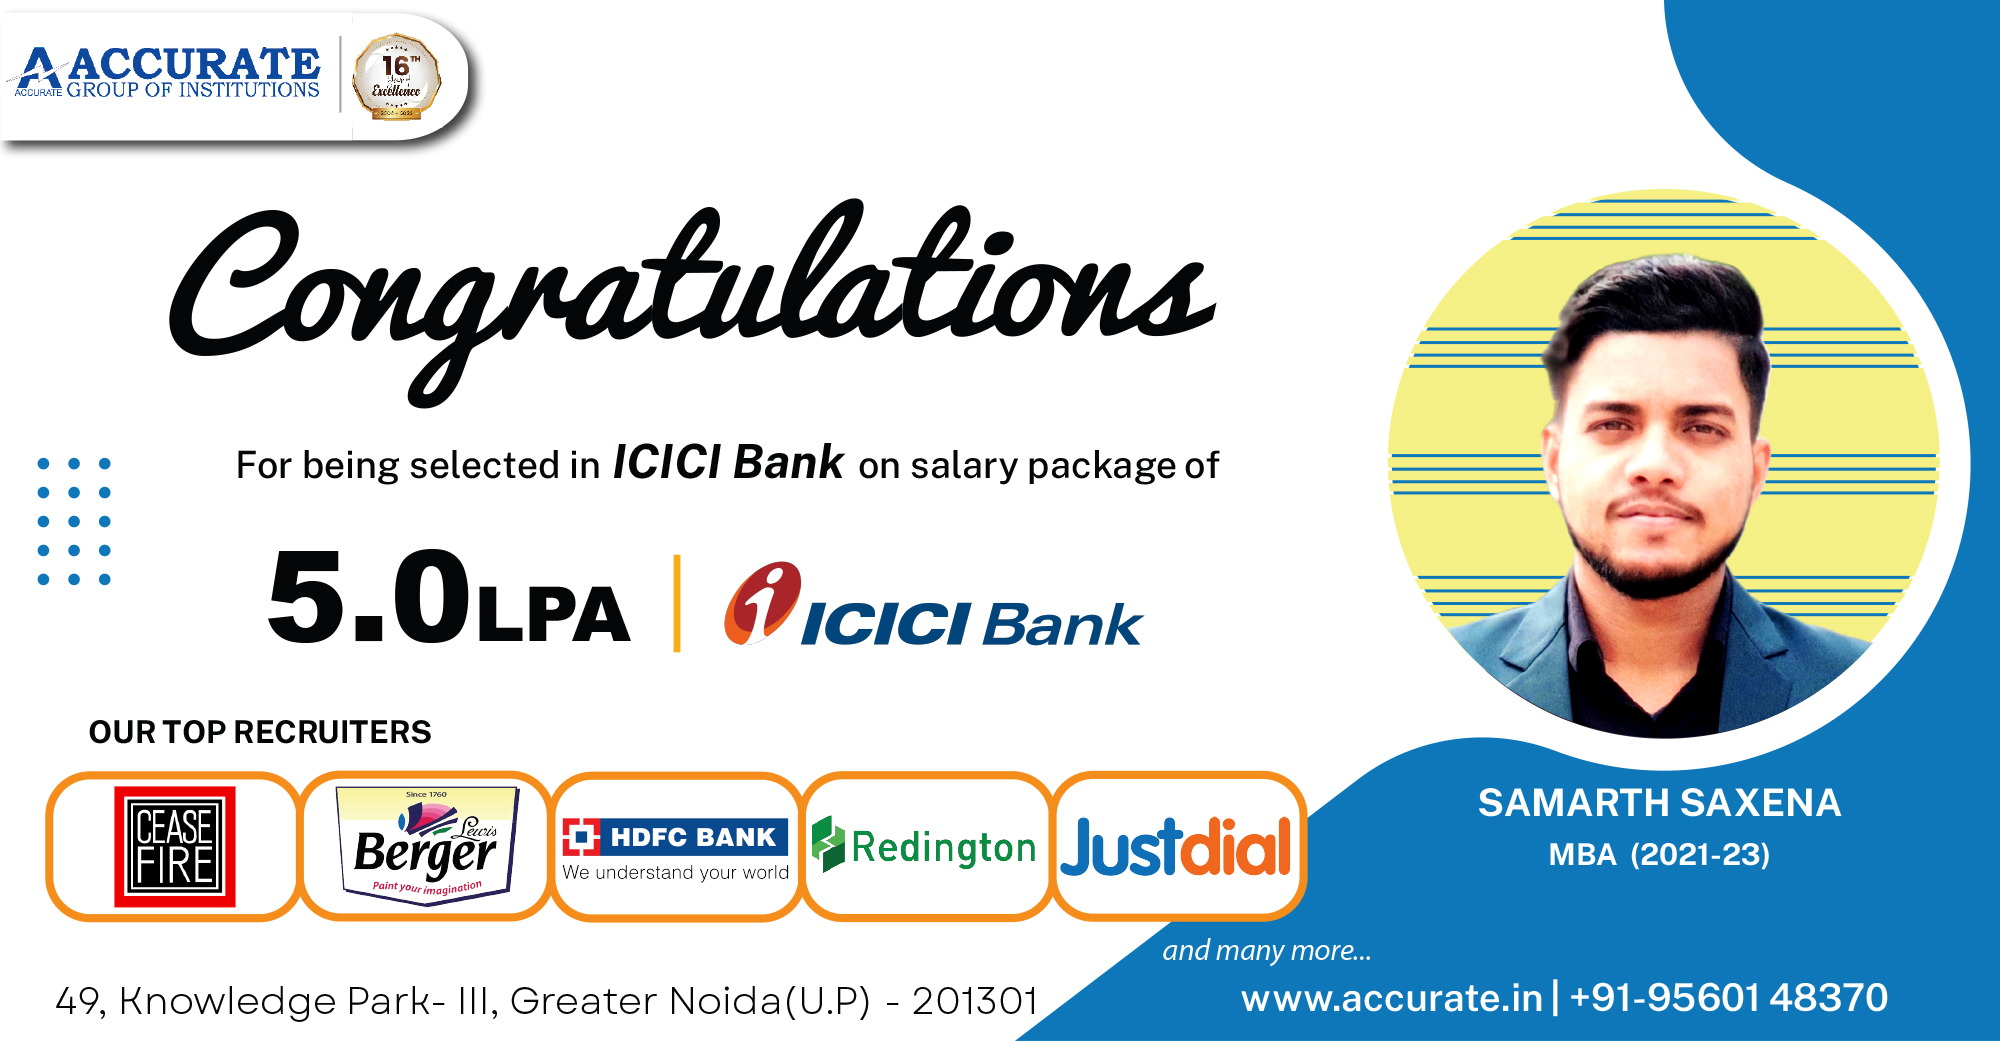 Samarth Saxena selected by ICICI Bank